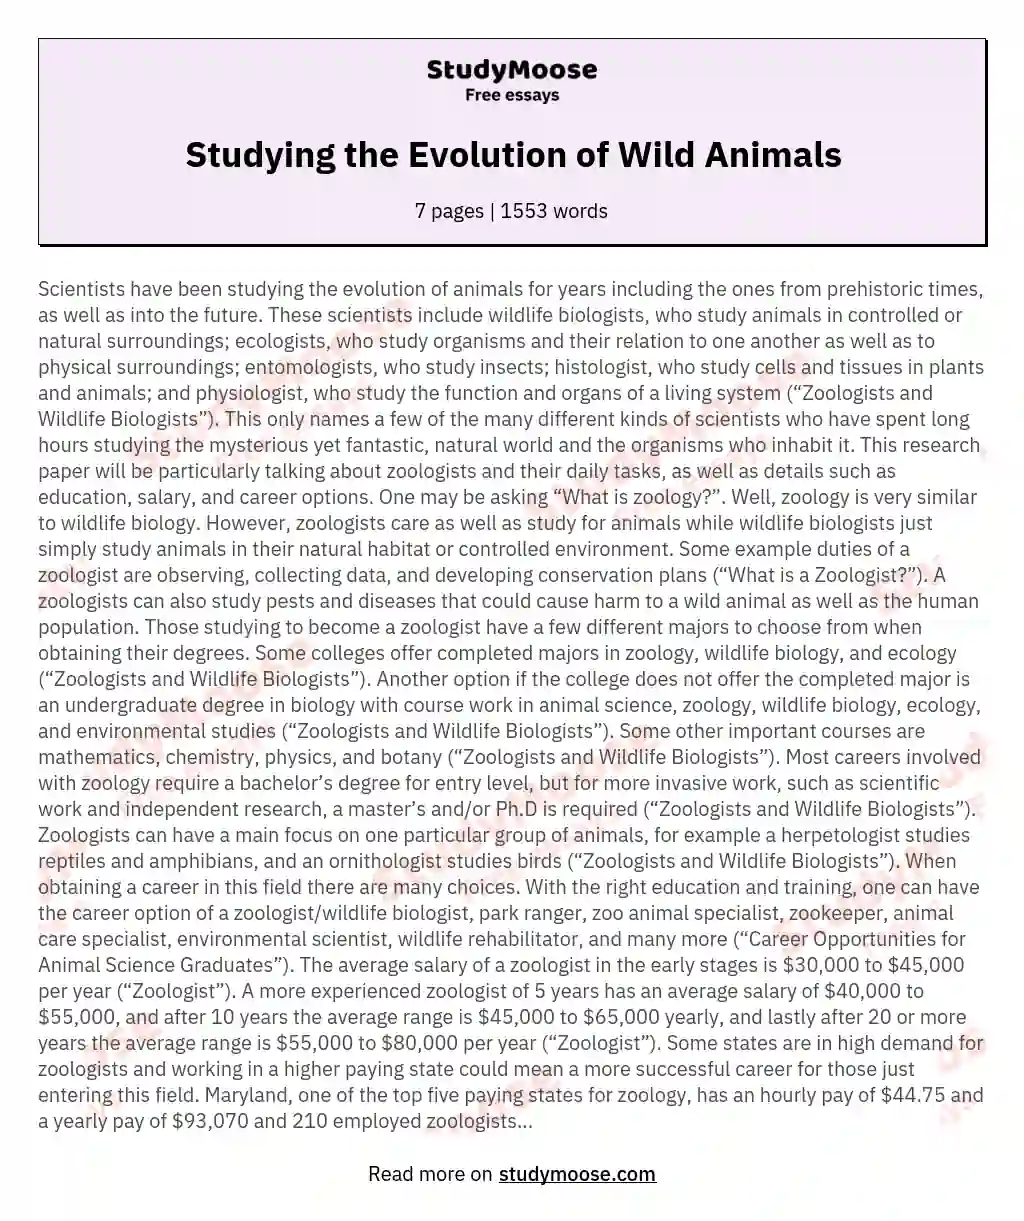 Studying the Evolution of Wild Animals essay